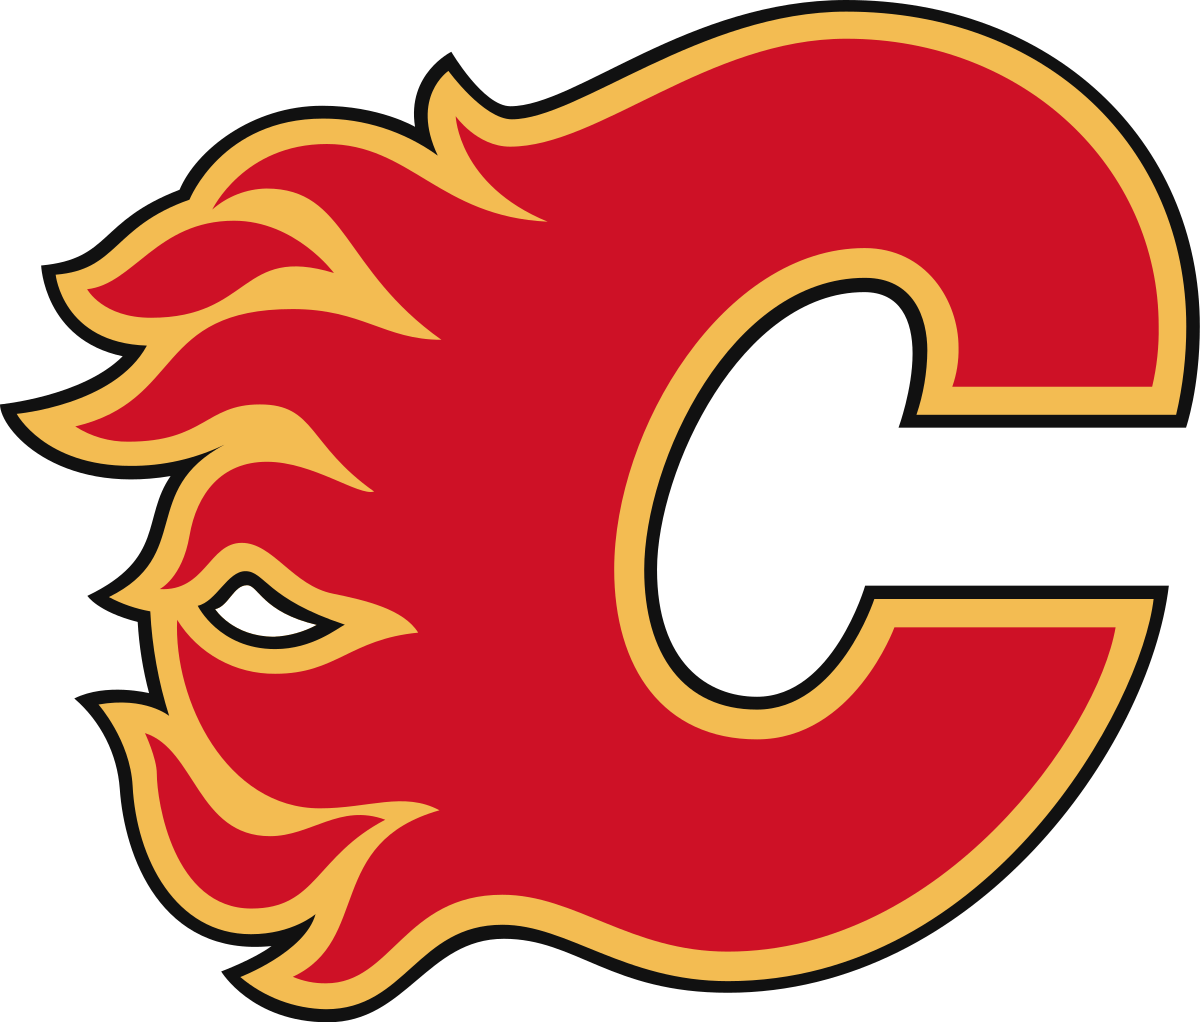 Red and White Flame Logo - Calgary Flames